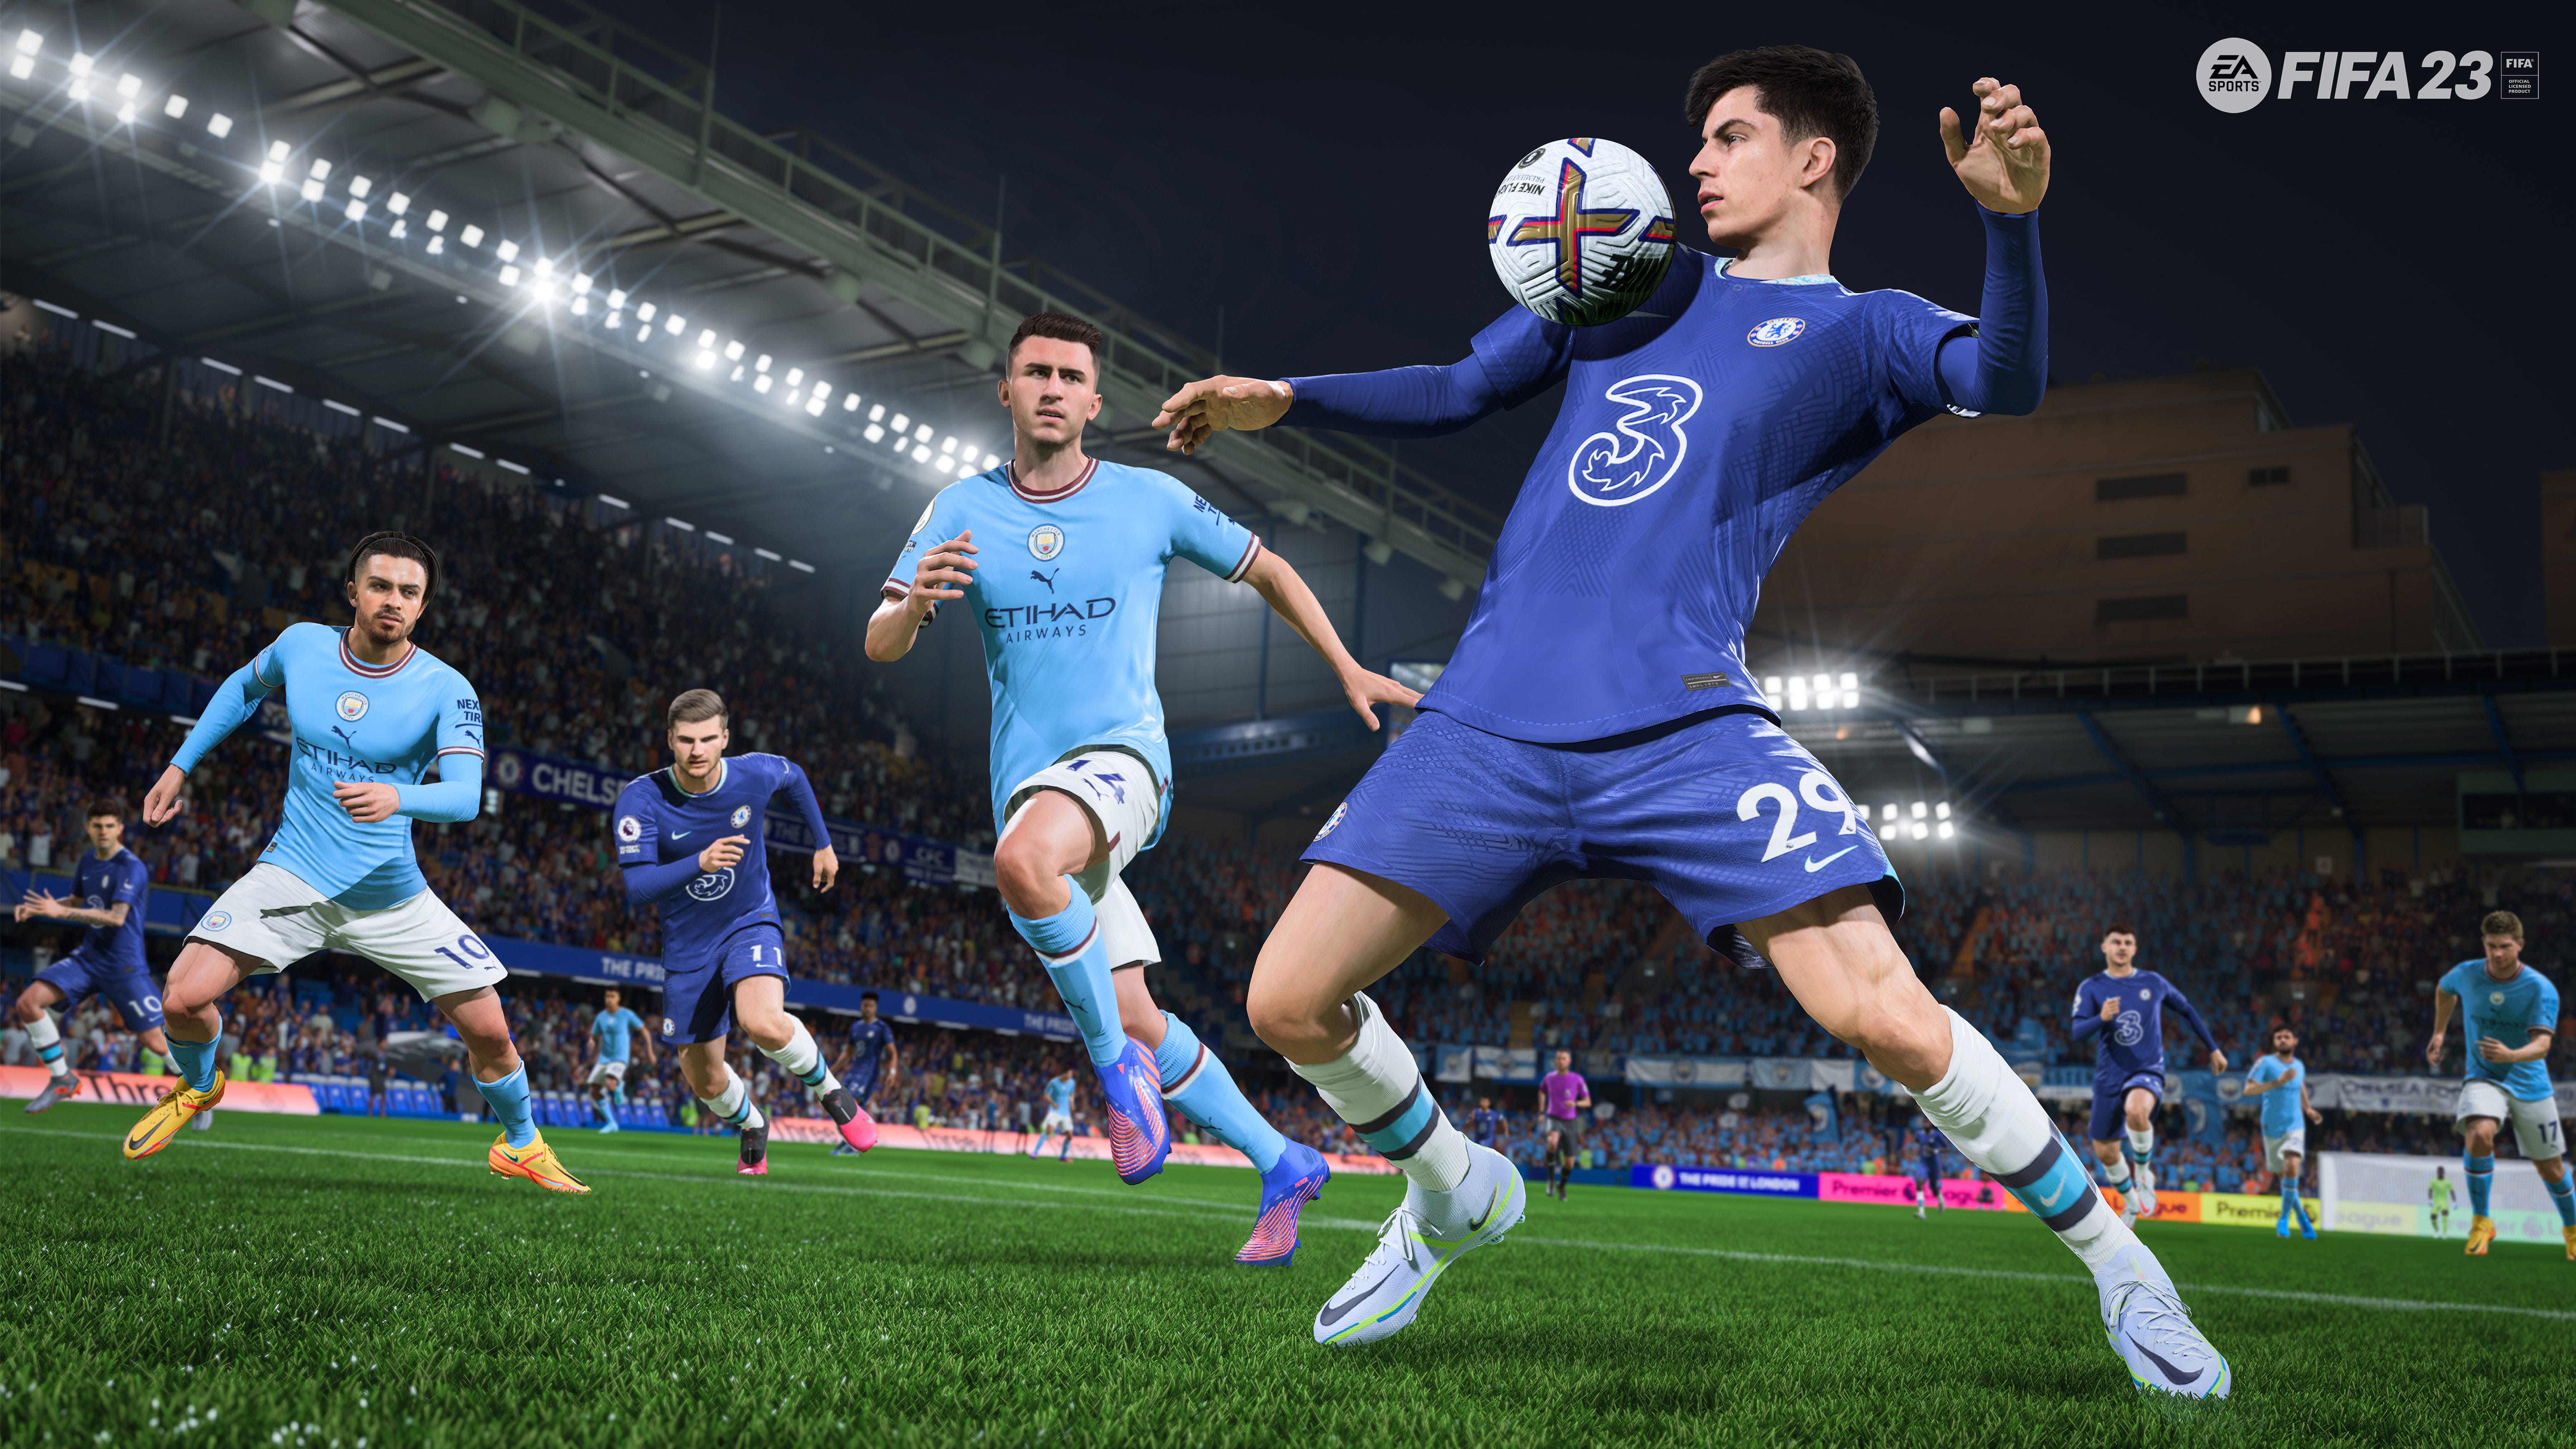 FIFA 23 Release, Preis, Cover-Star, neue Features, Trailer, Konsolen